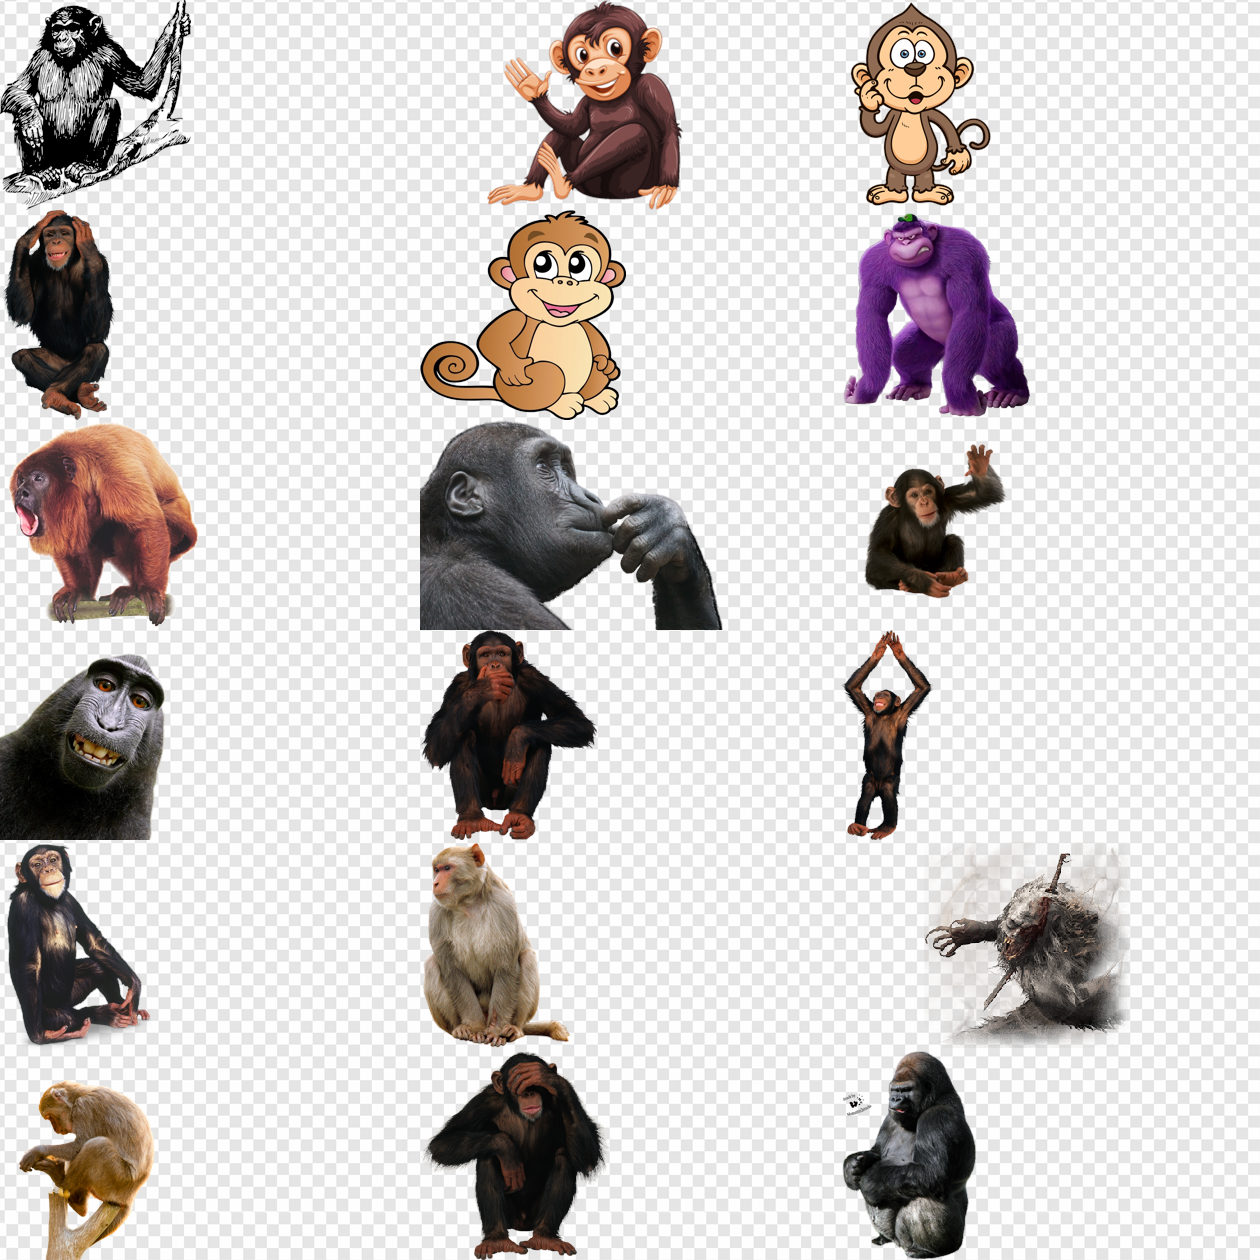 Ape PNG Transparent Images Download - PNG Packs